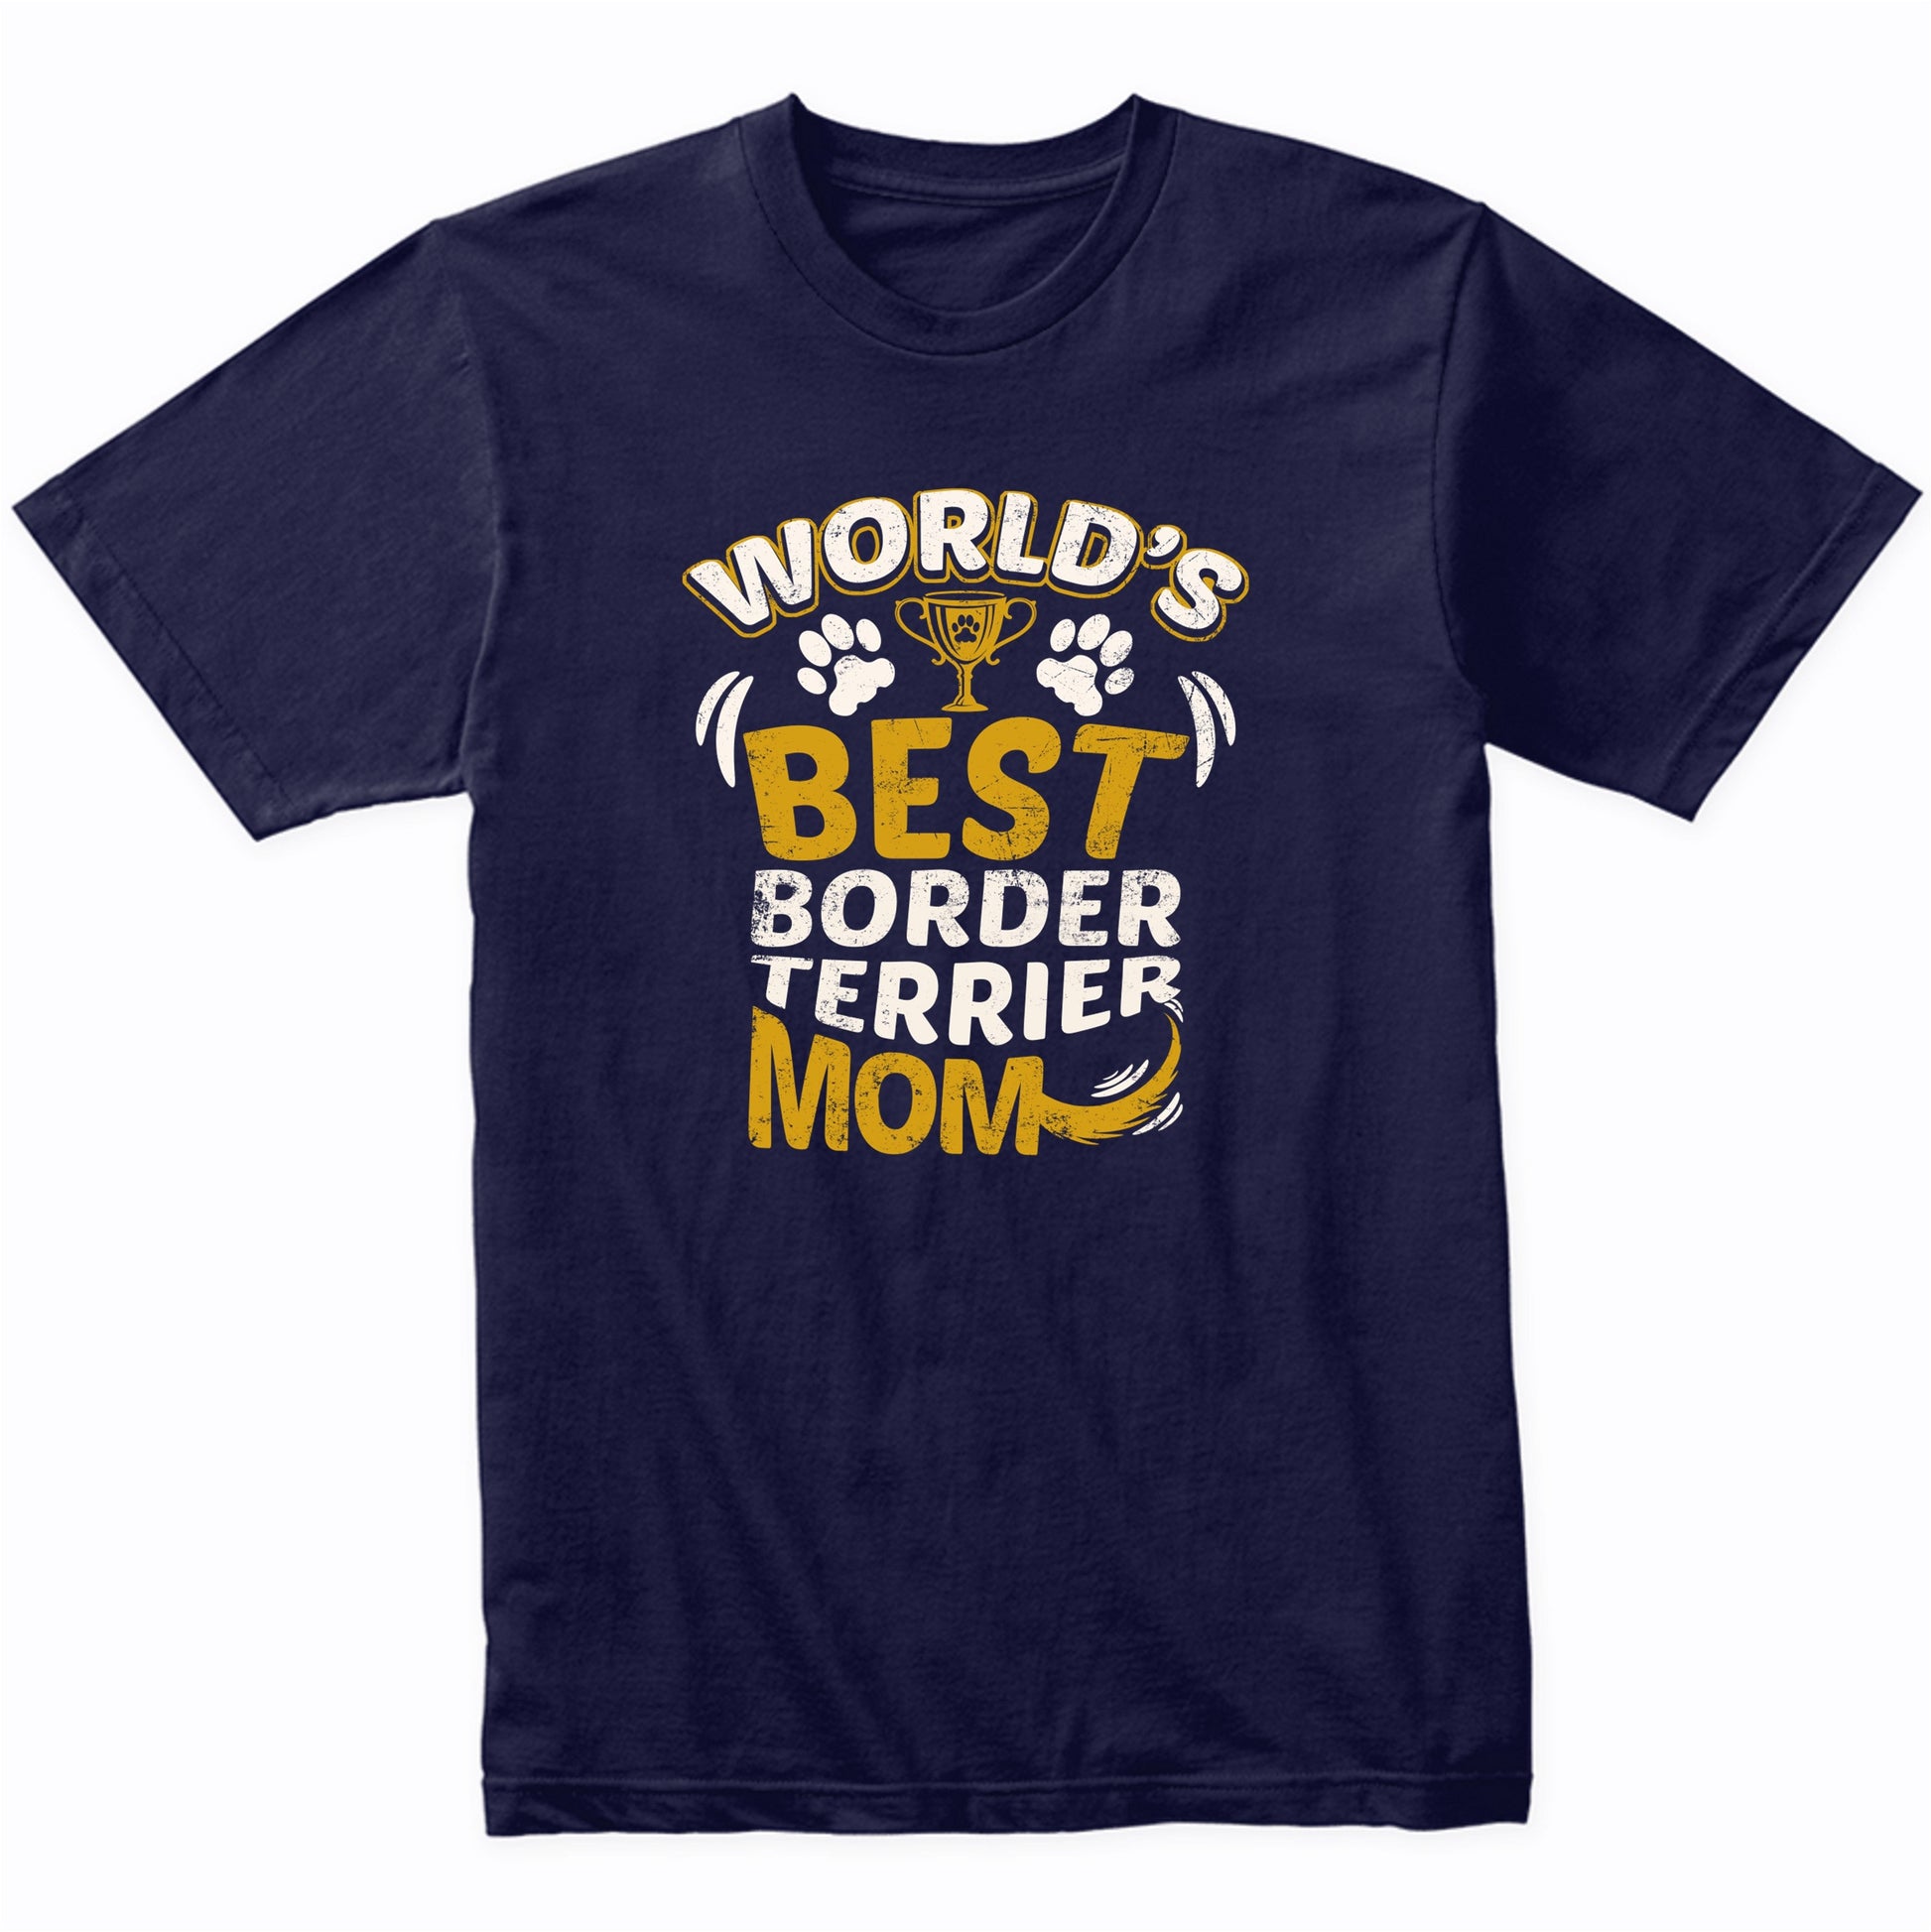 World's Best Border Terrier Mom Graphic T-Shirt